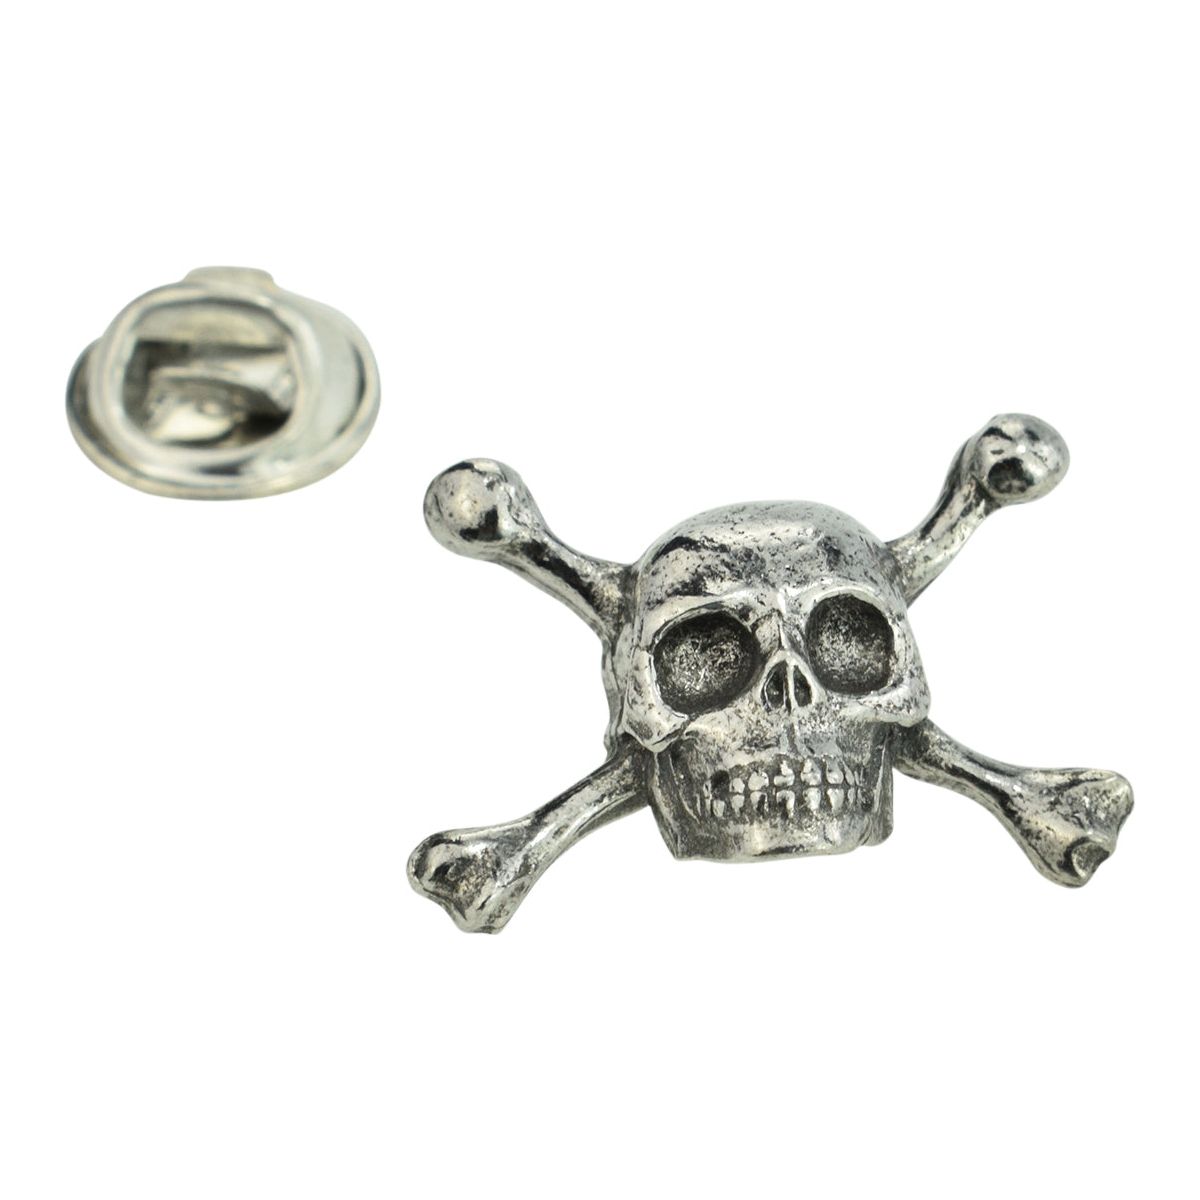 Skull & Crossbones Lapel Pin Badge - Ashton and Finch